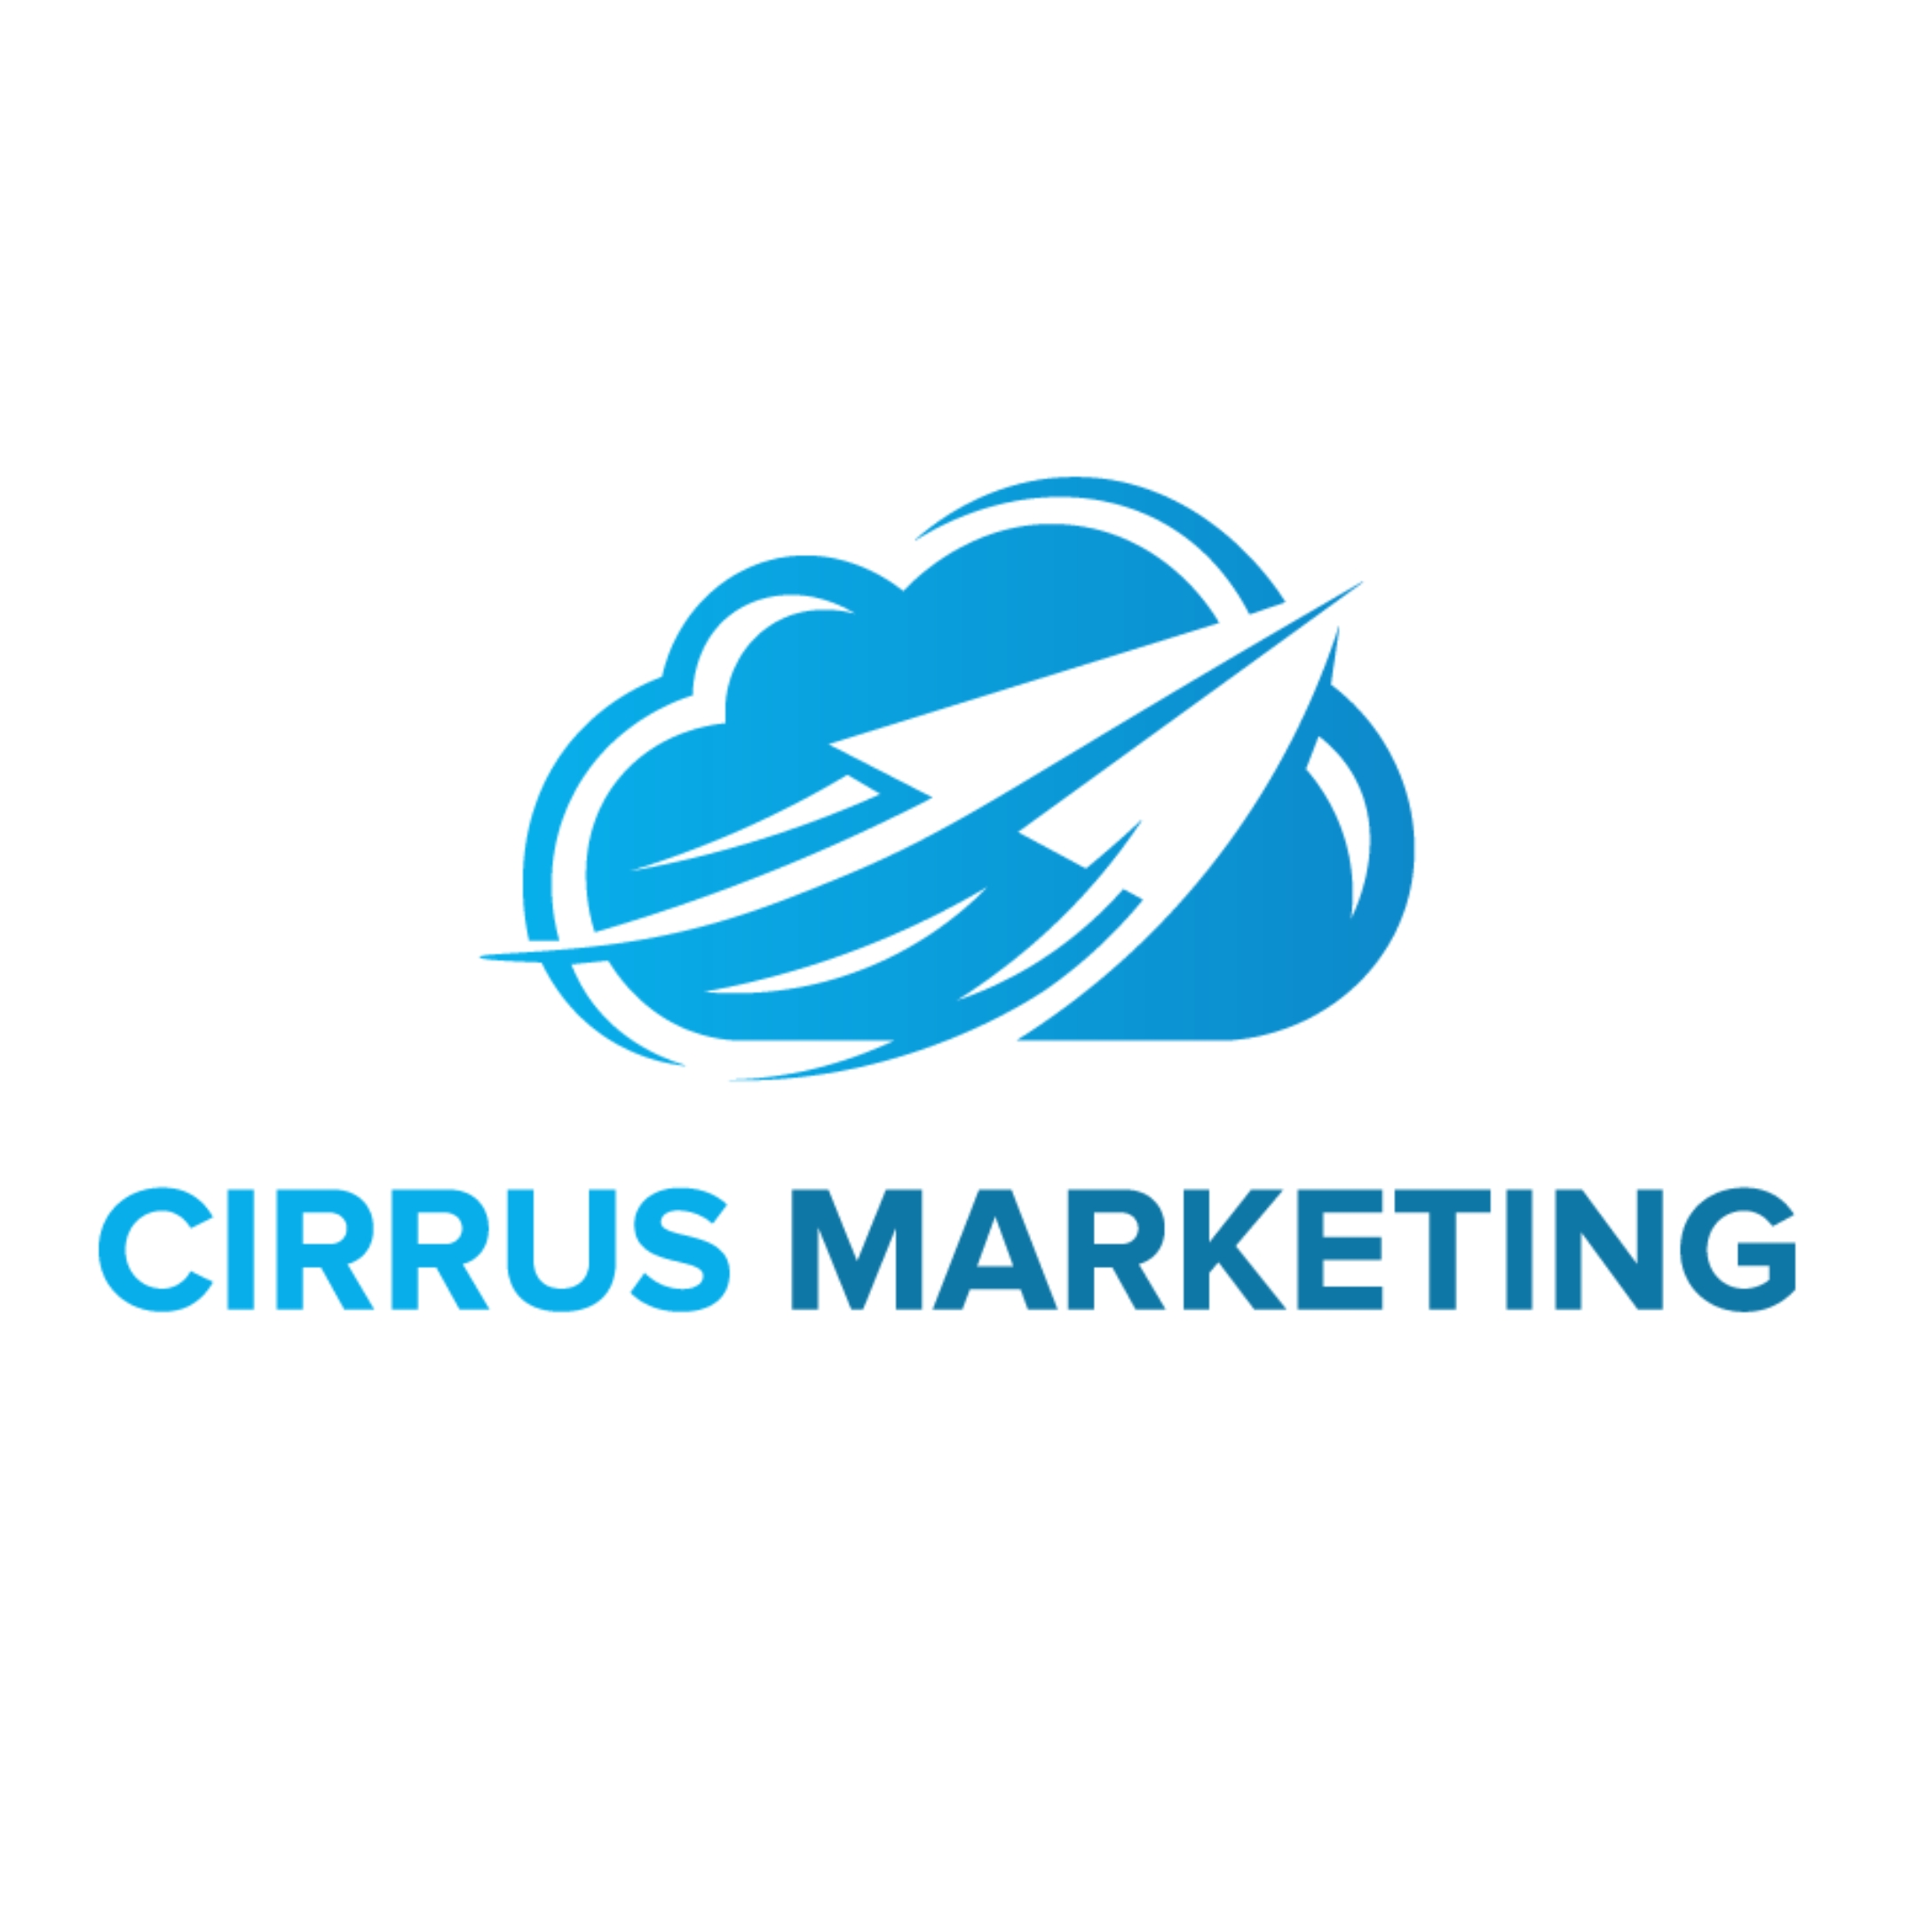 Cirrus Marketing